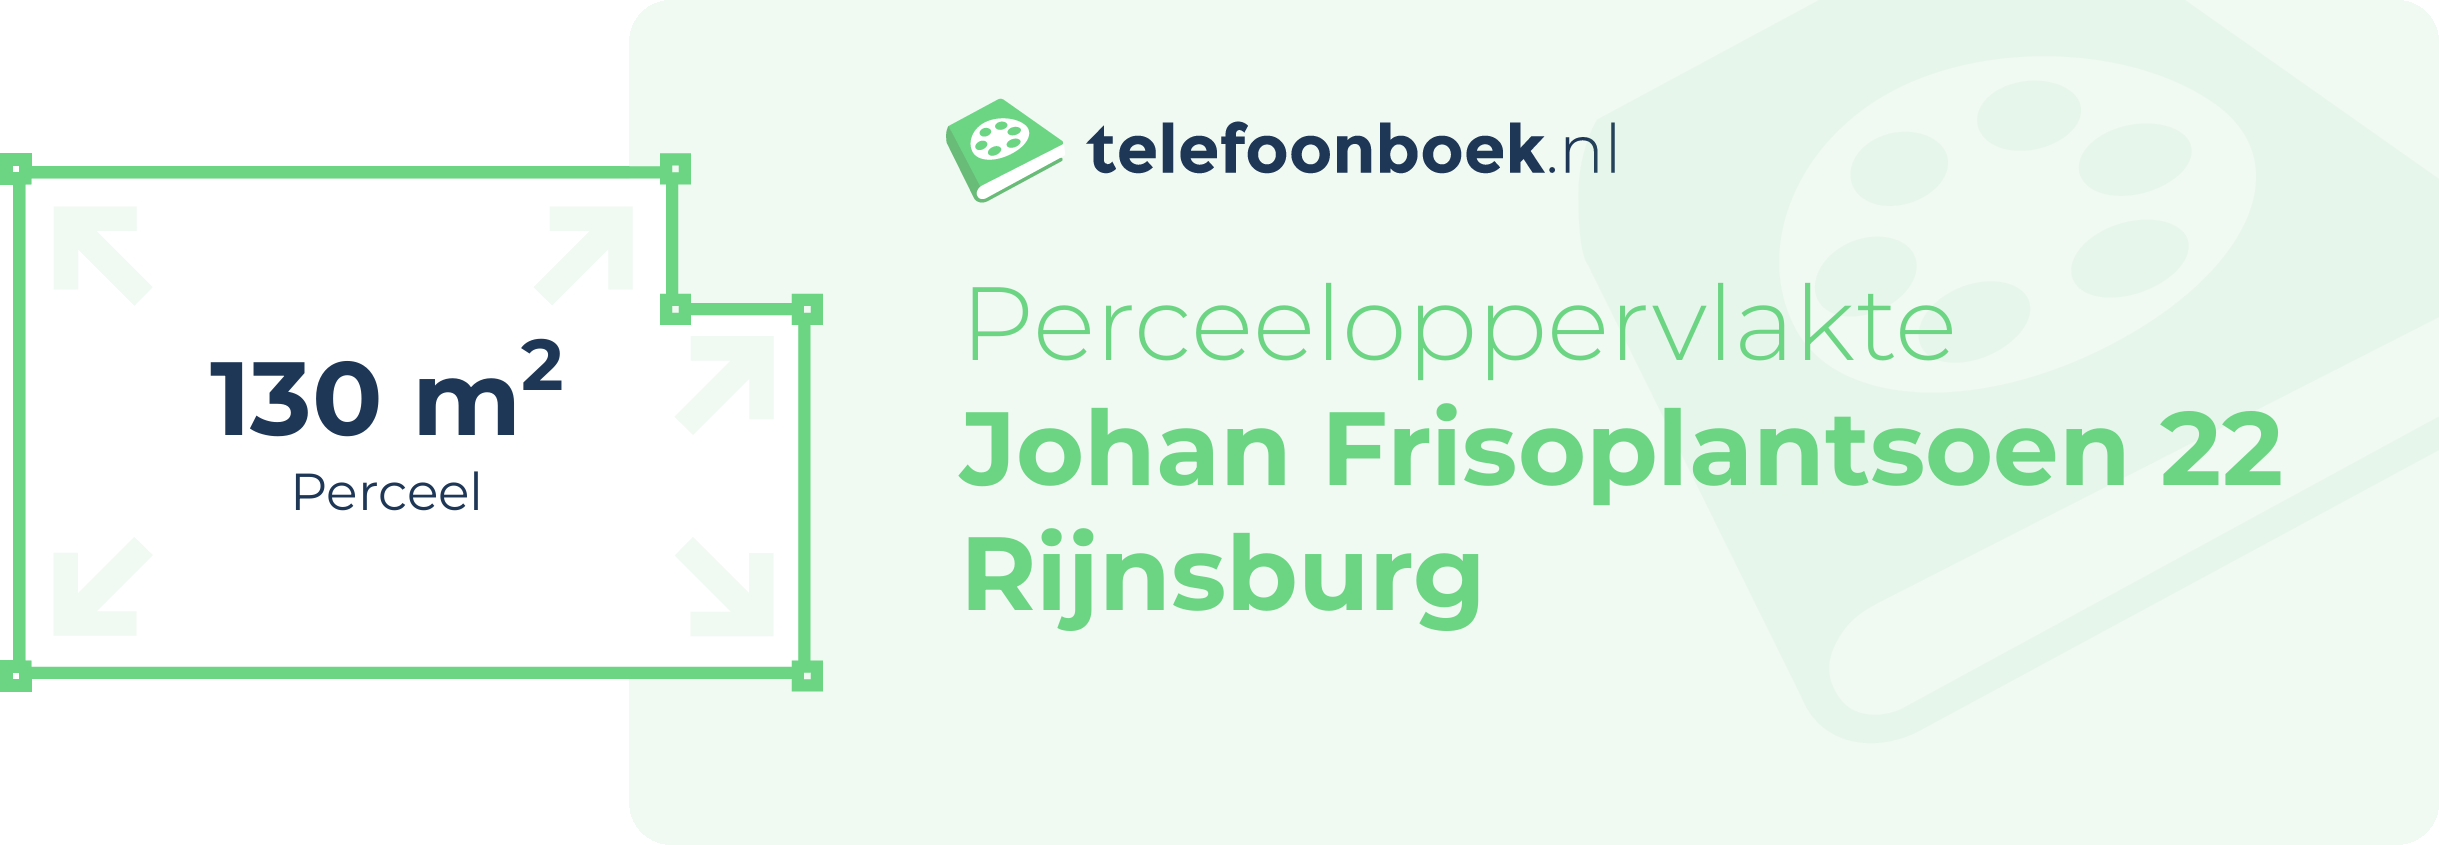 Perceeloppervlakte Johan Frisoplantsoen 22 Rijnsburg